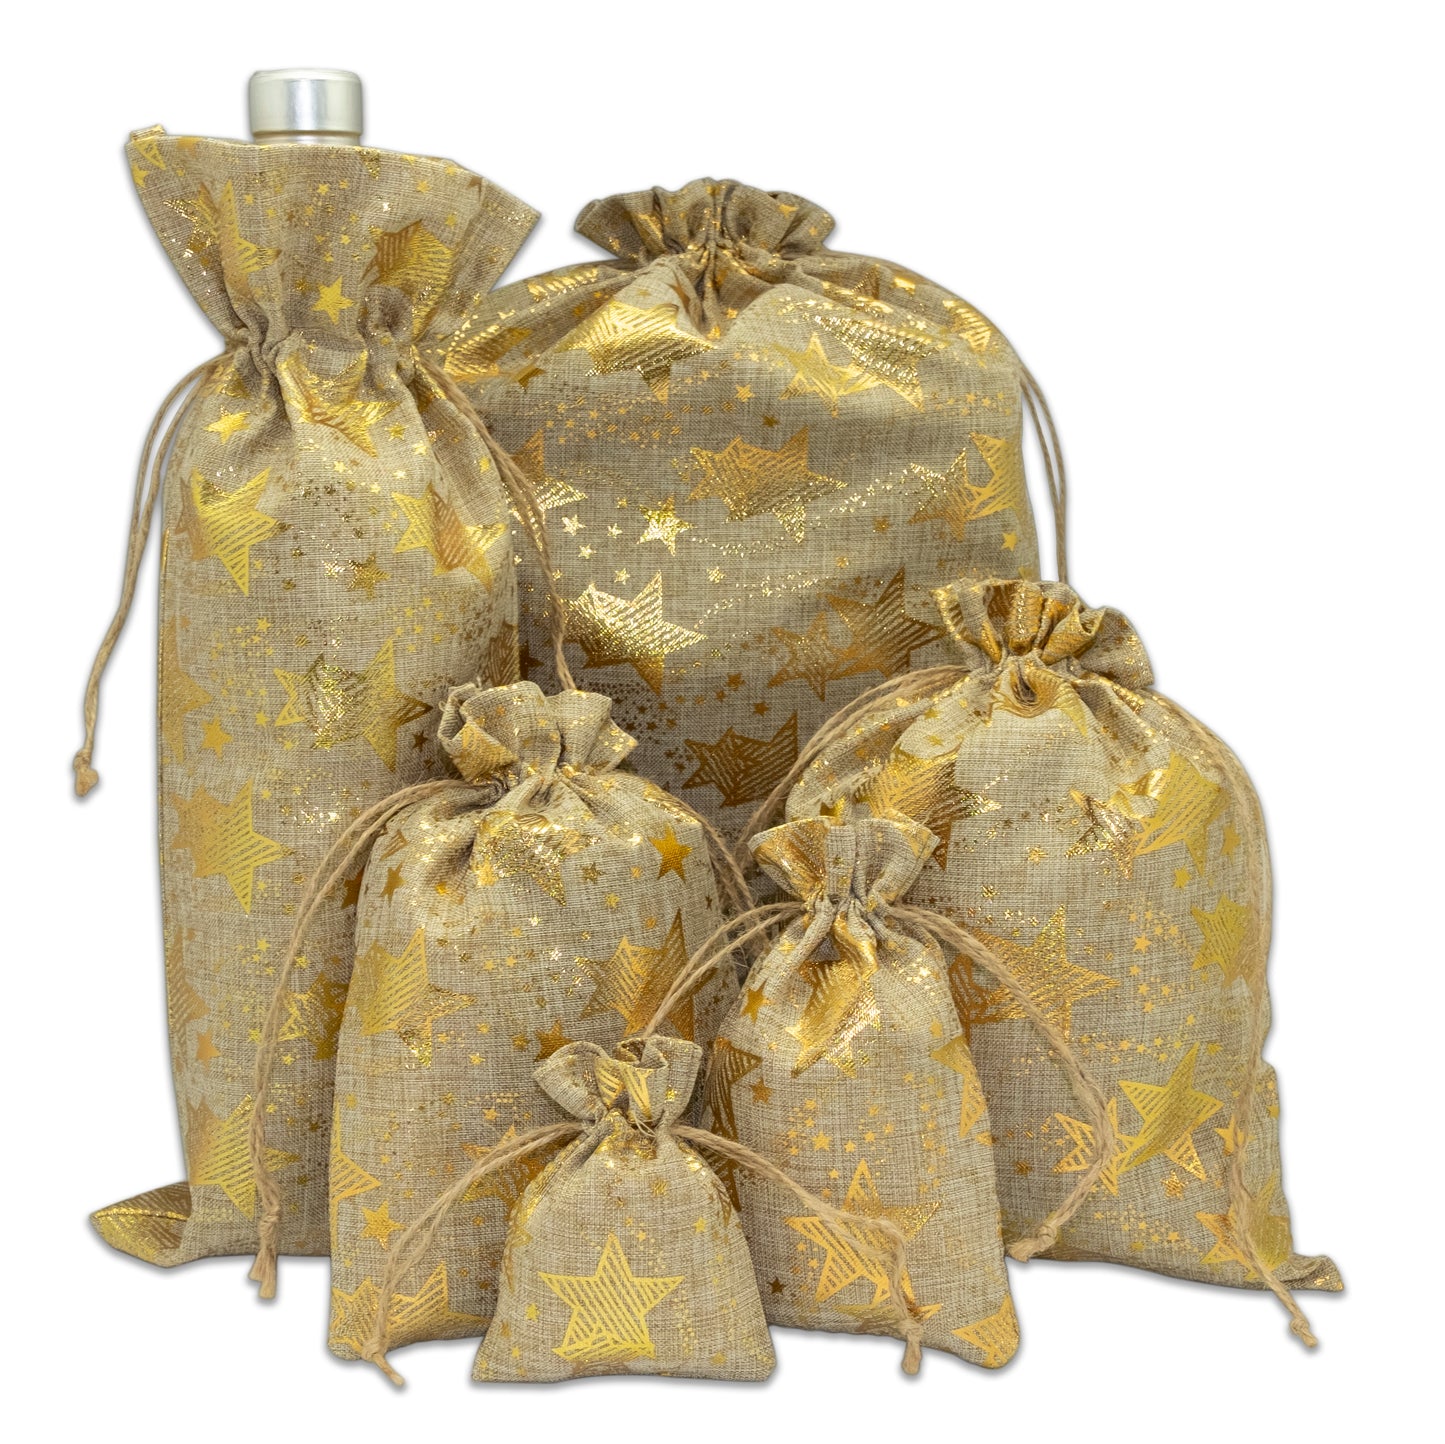 12" x 16" Jute Burlap Gold Star Drawstring Gift Bags